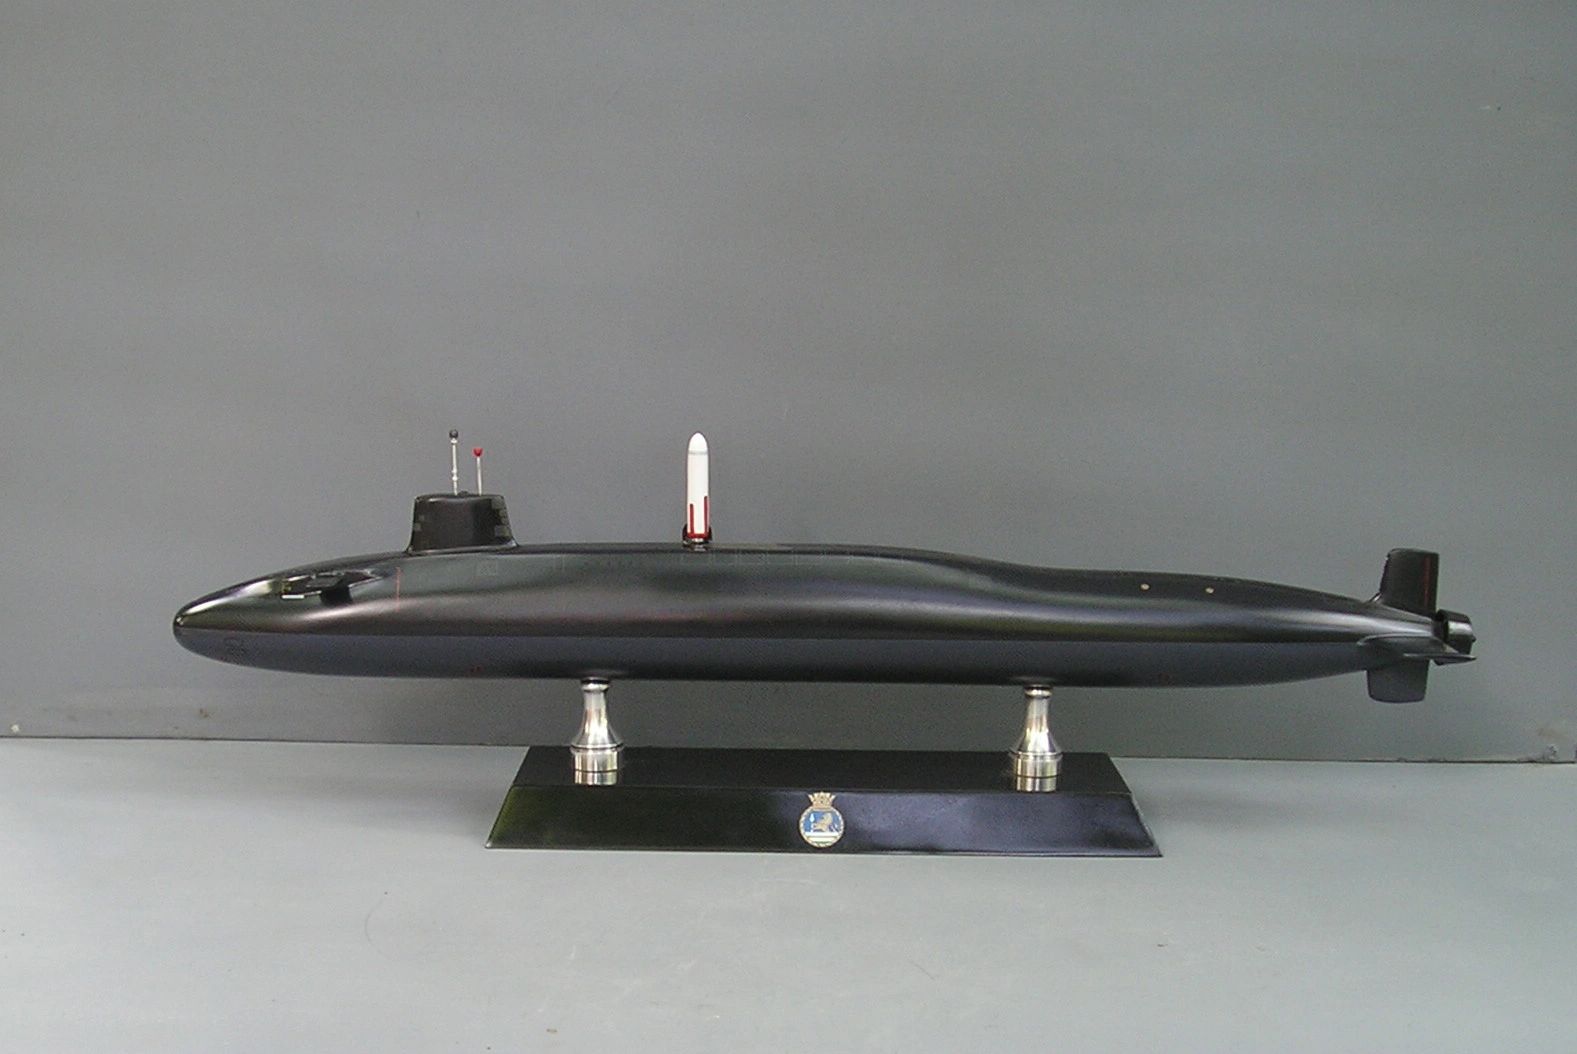 Vanguard custom submarine model